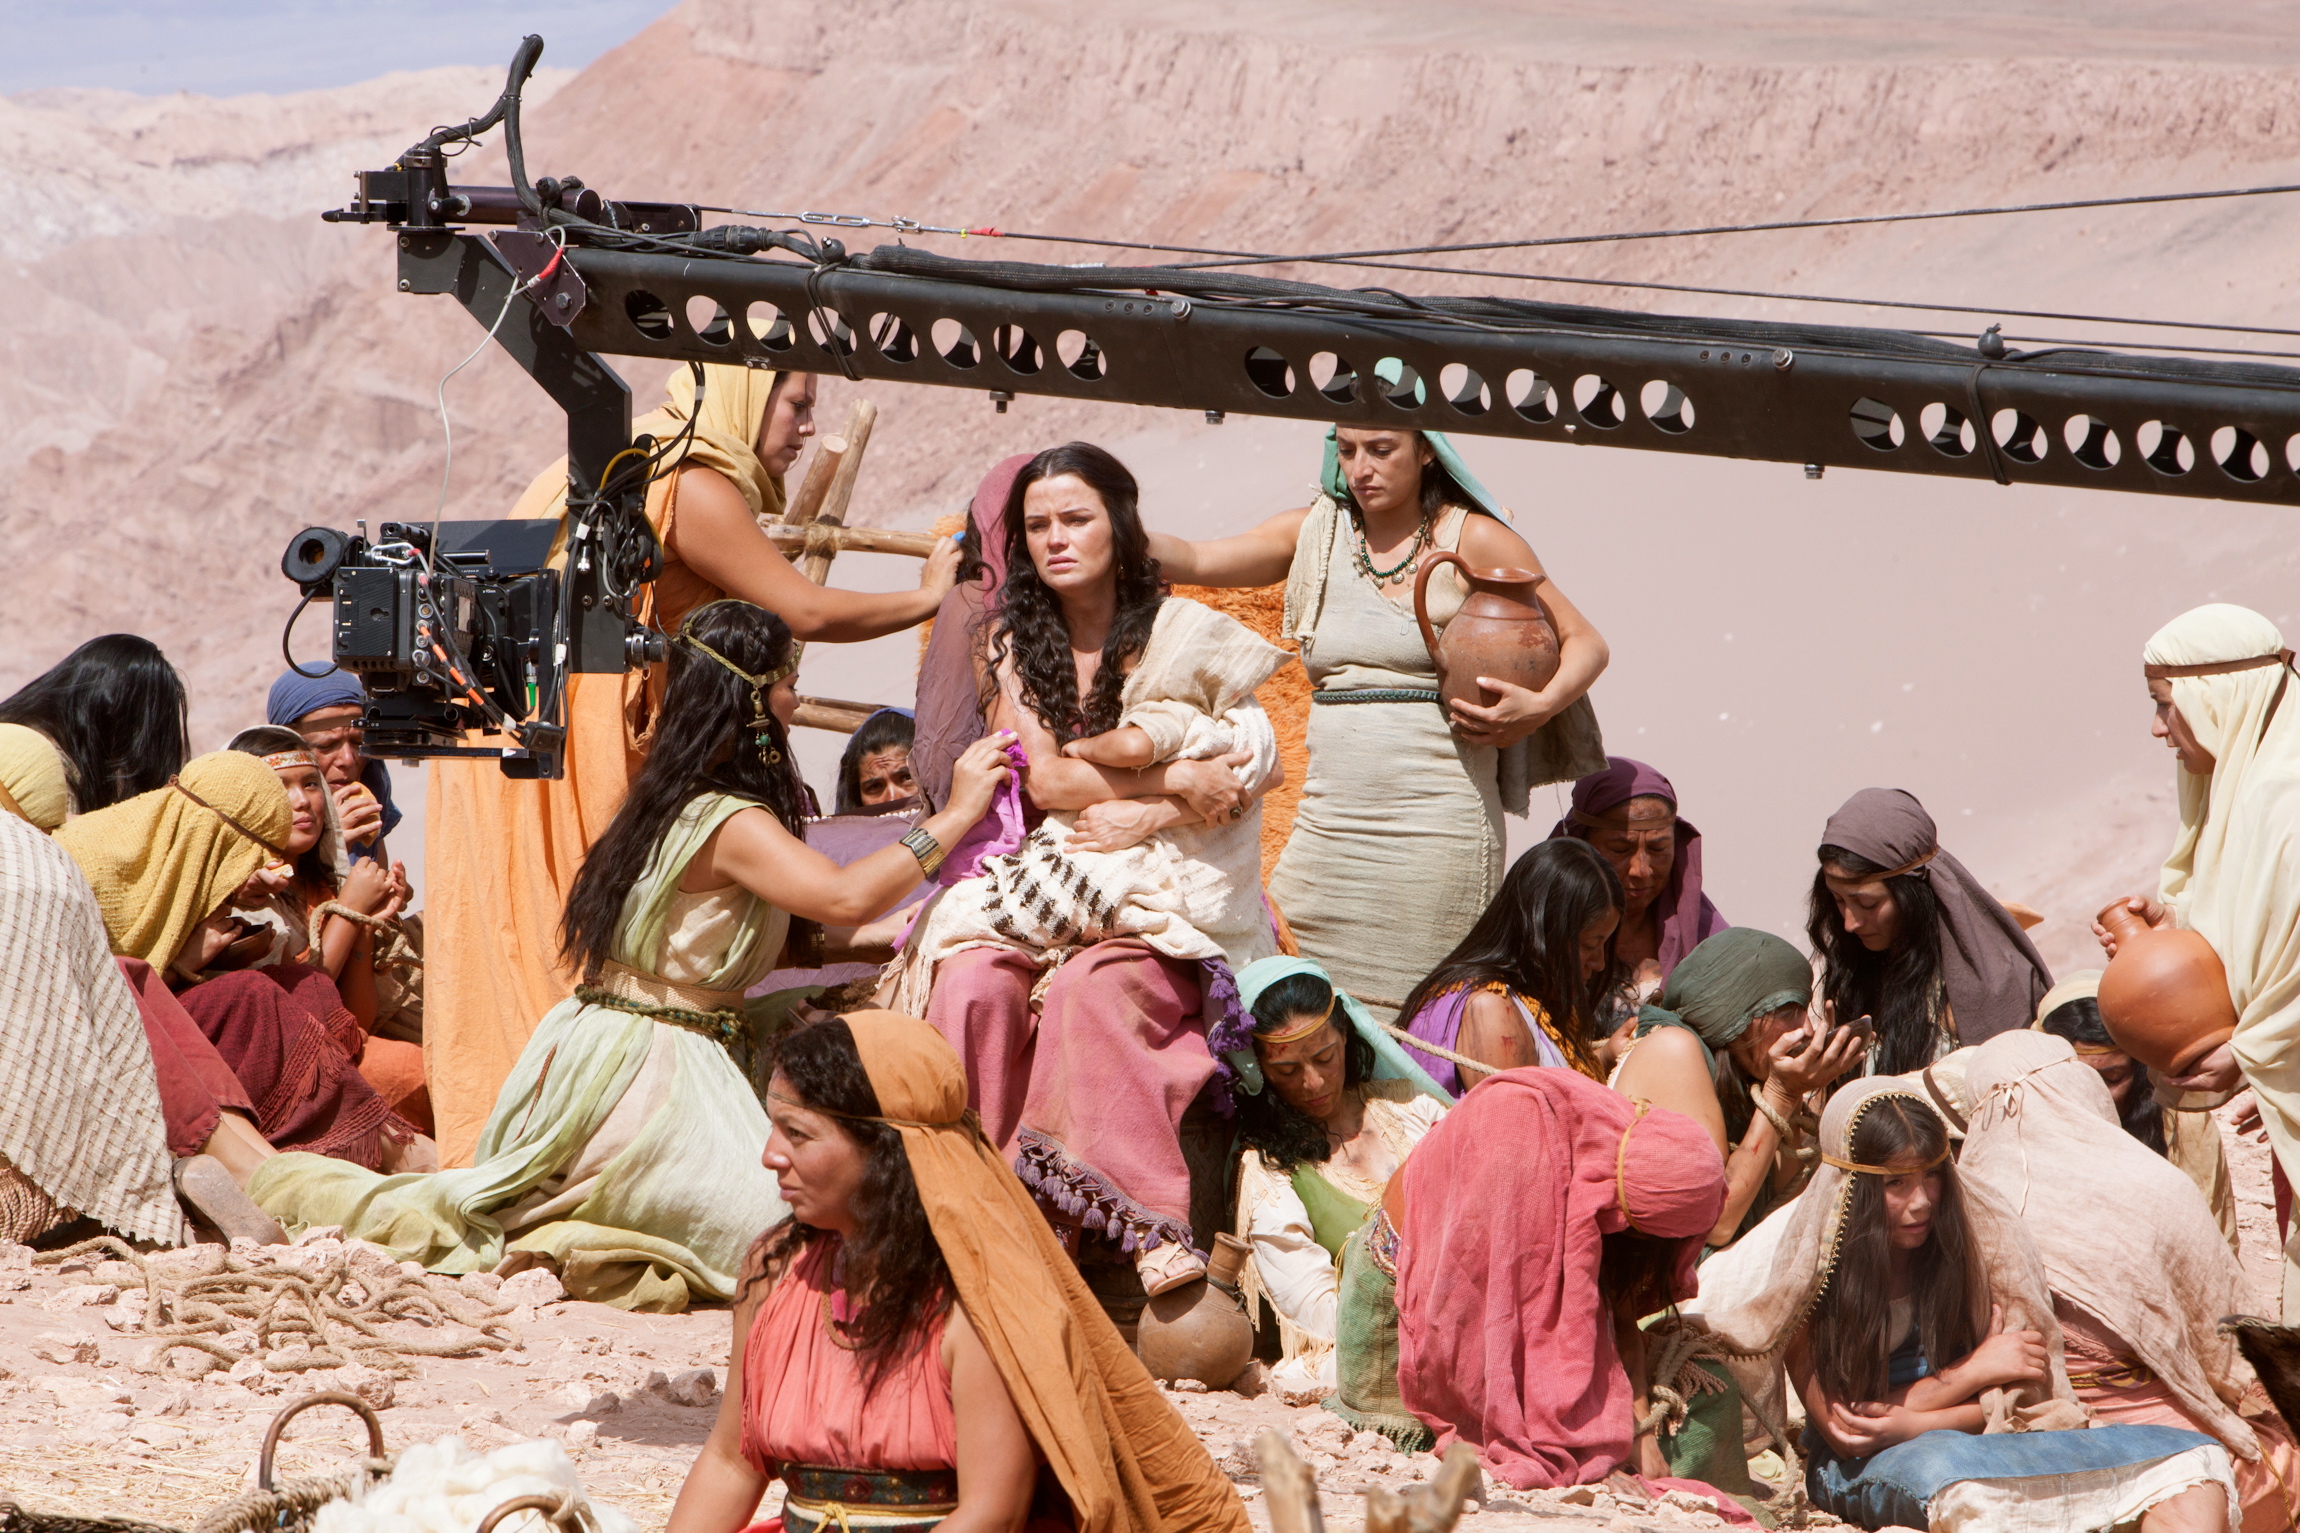 Nanda Ziegler filming in the Atacama desert, Chile, for José do Egito (TV series 2013).